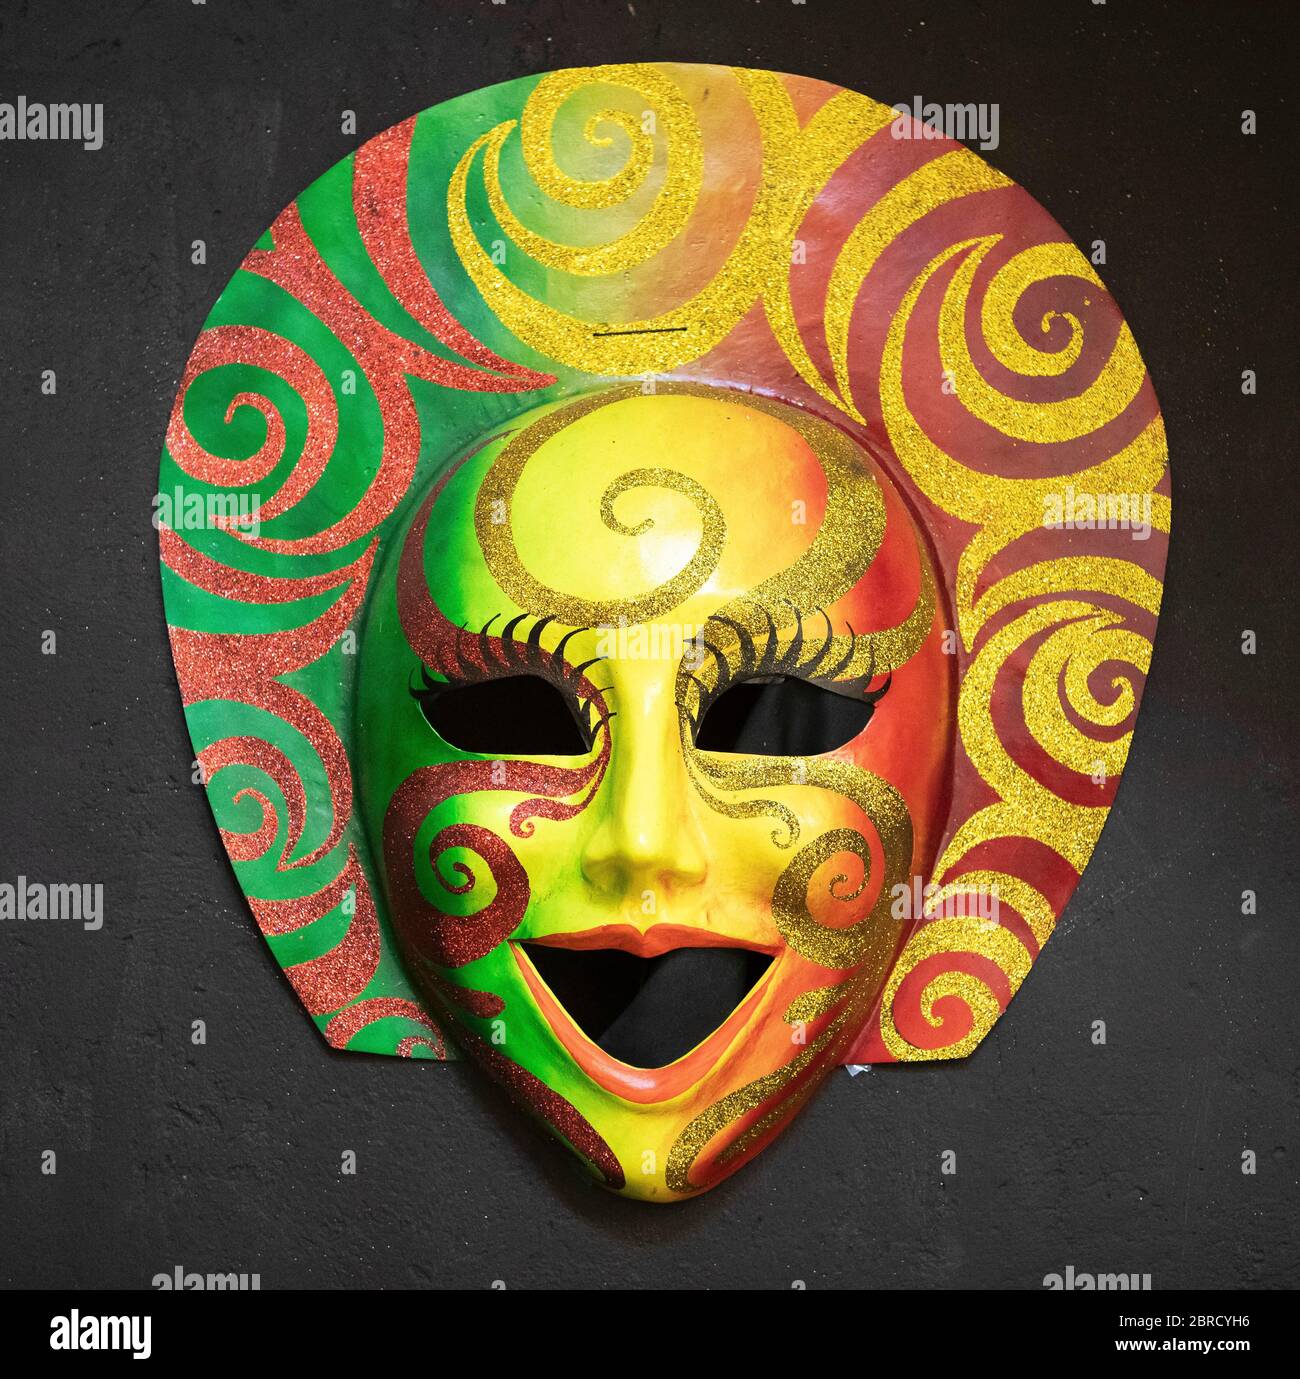 Mascara mask hi-res stock photography and images - Alamy